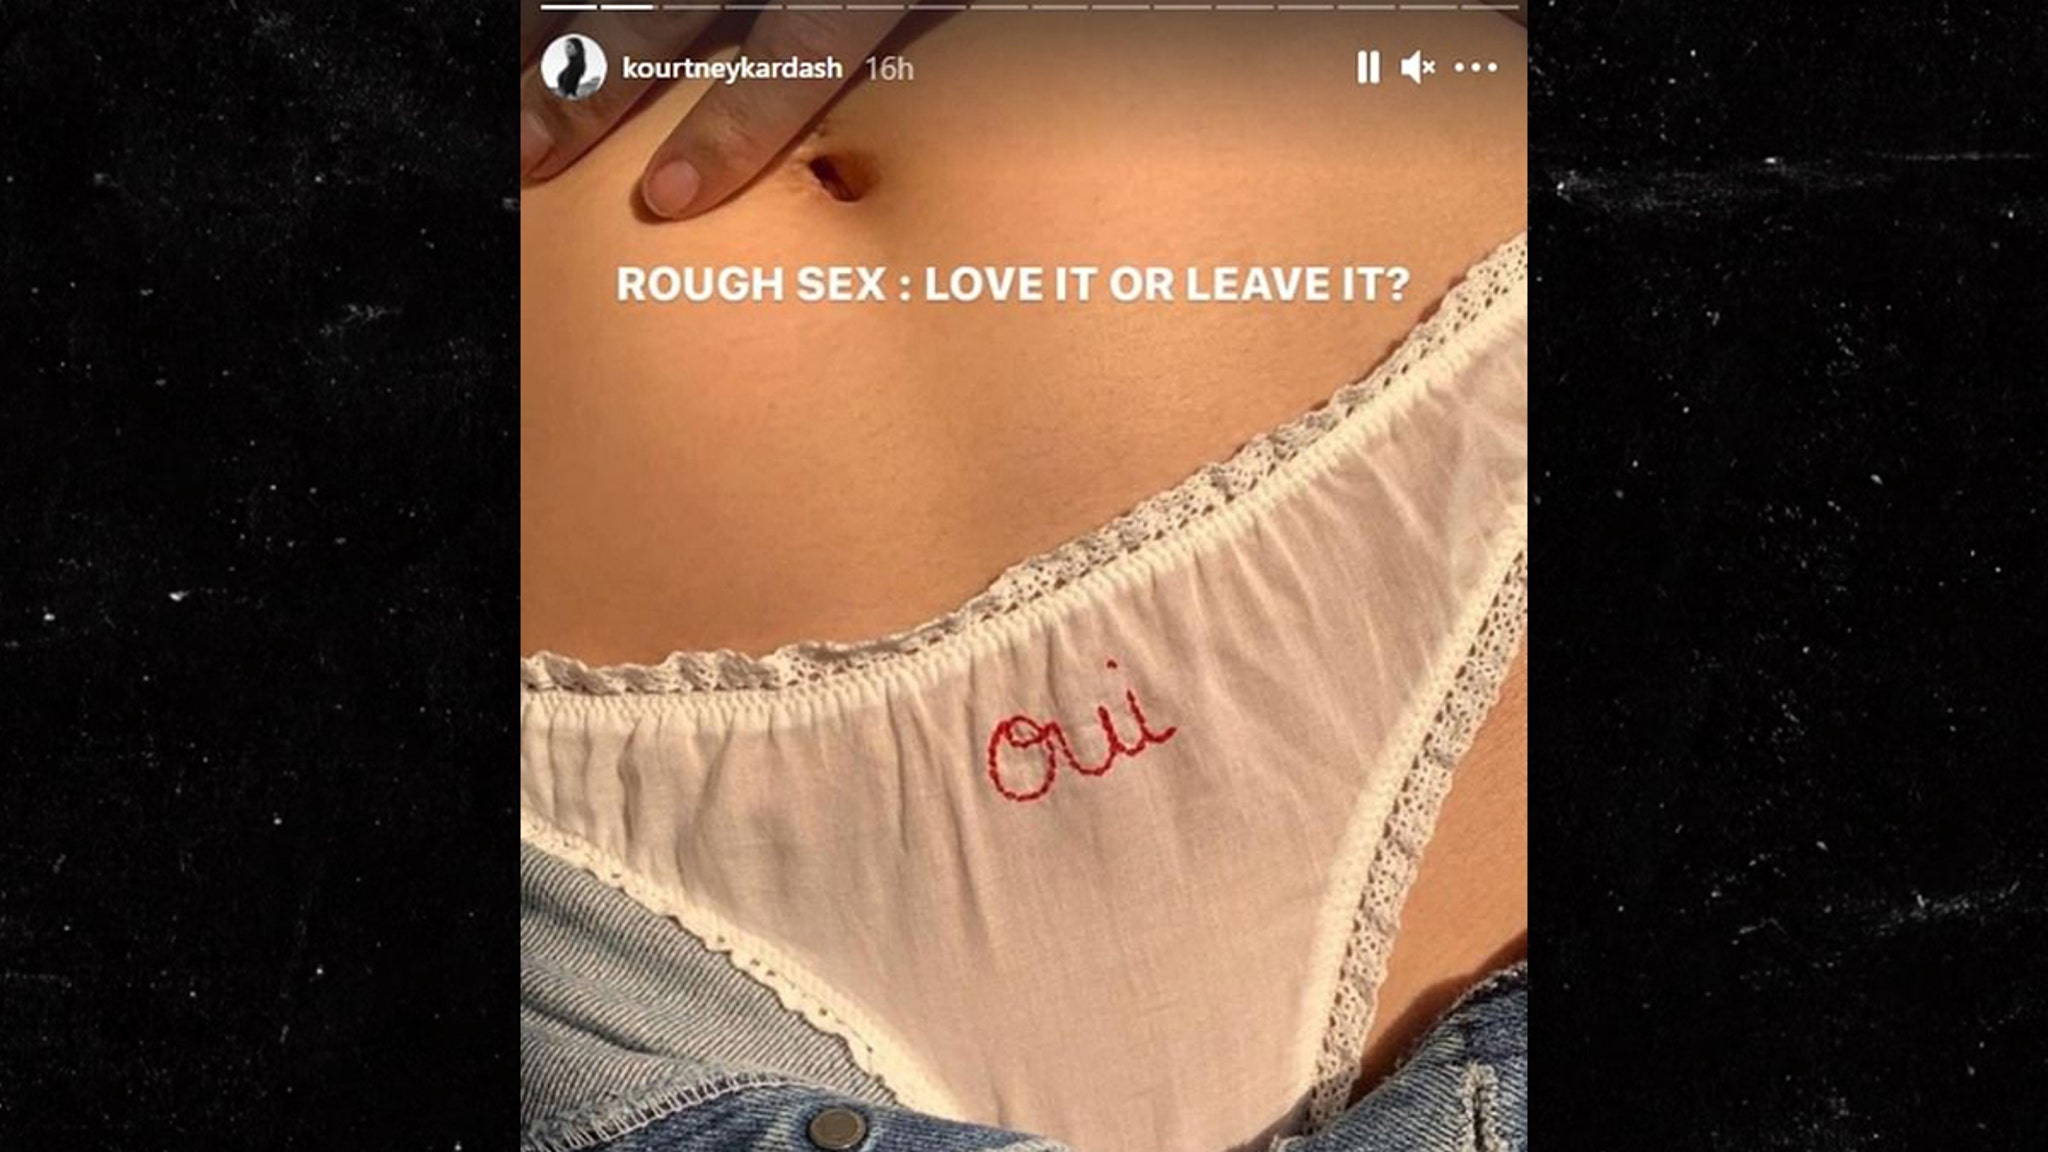 Kourtney K hits followers with ‘Rough Sex’ poll, flash ‘Oui’ shorts